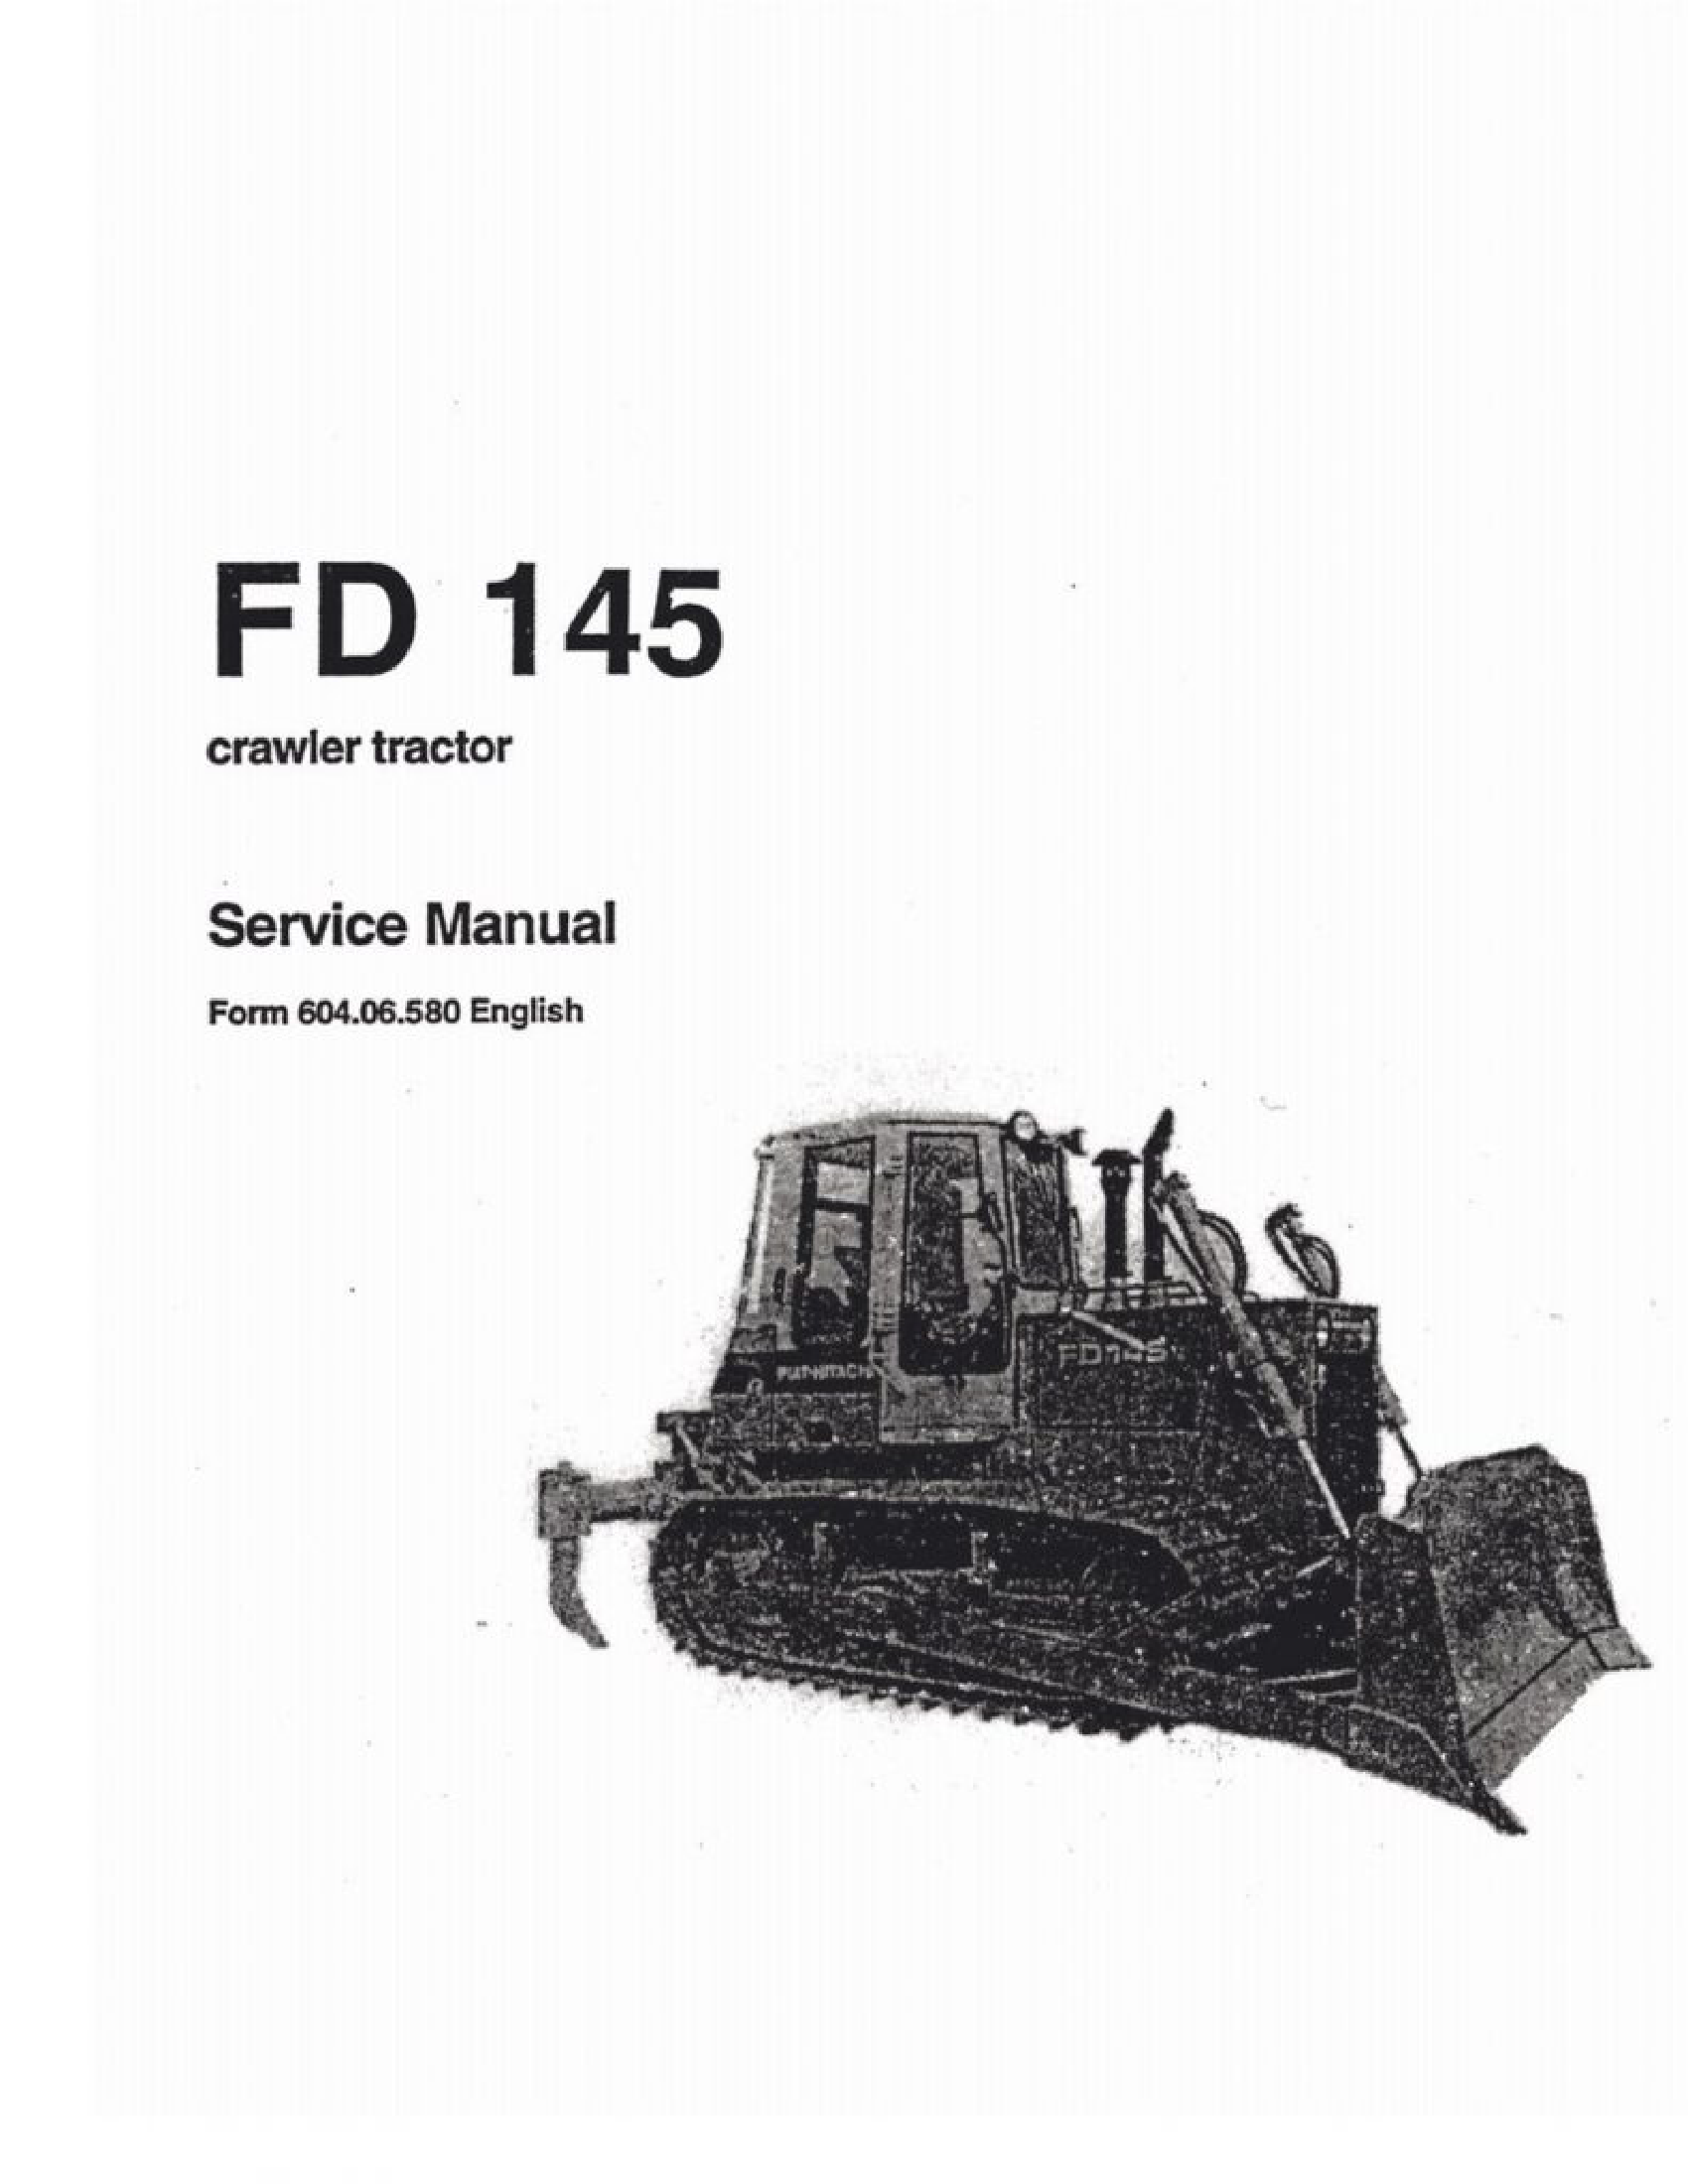 Fiat-Allis 145 FD Crawler Tractor manual